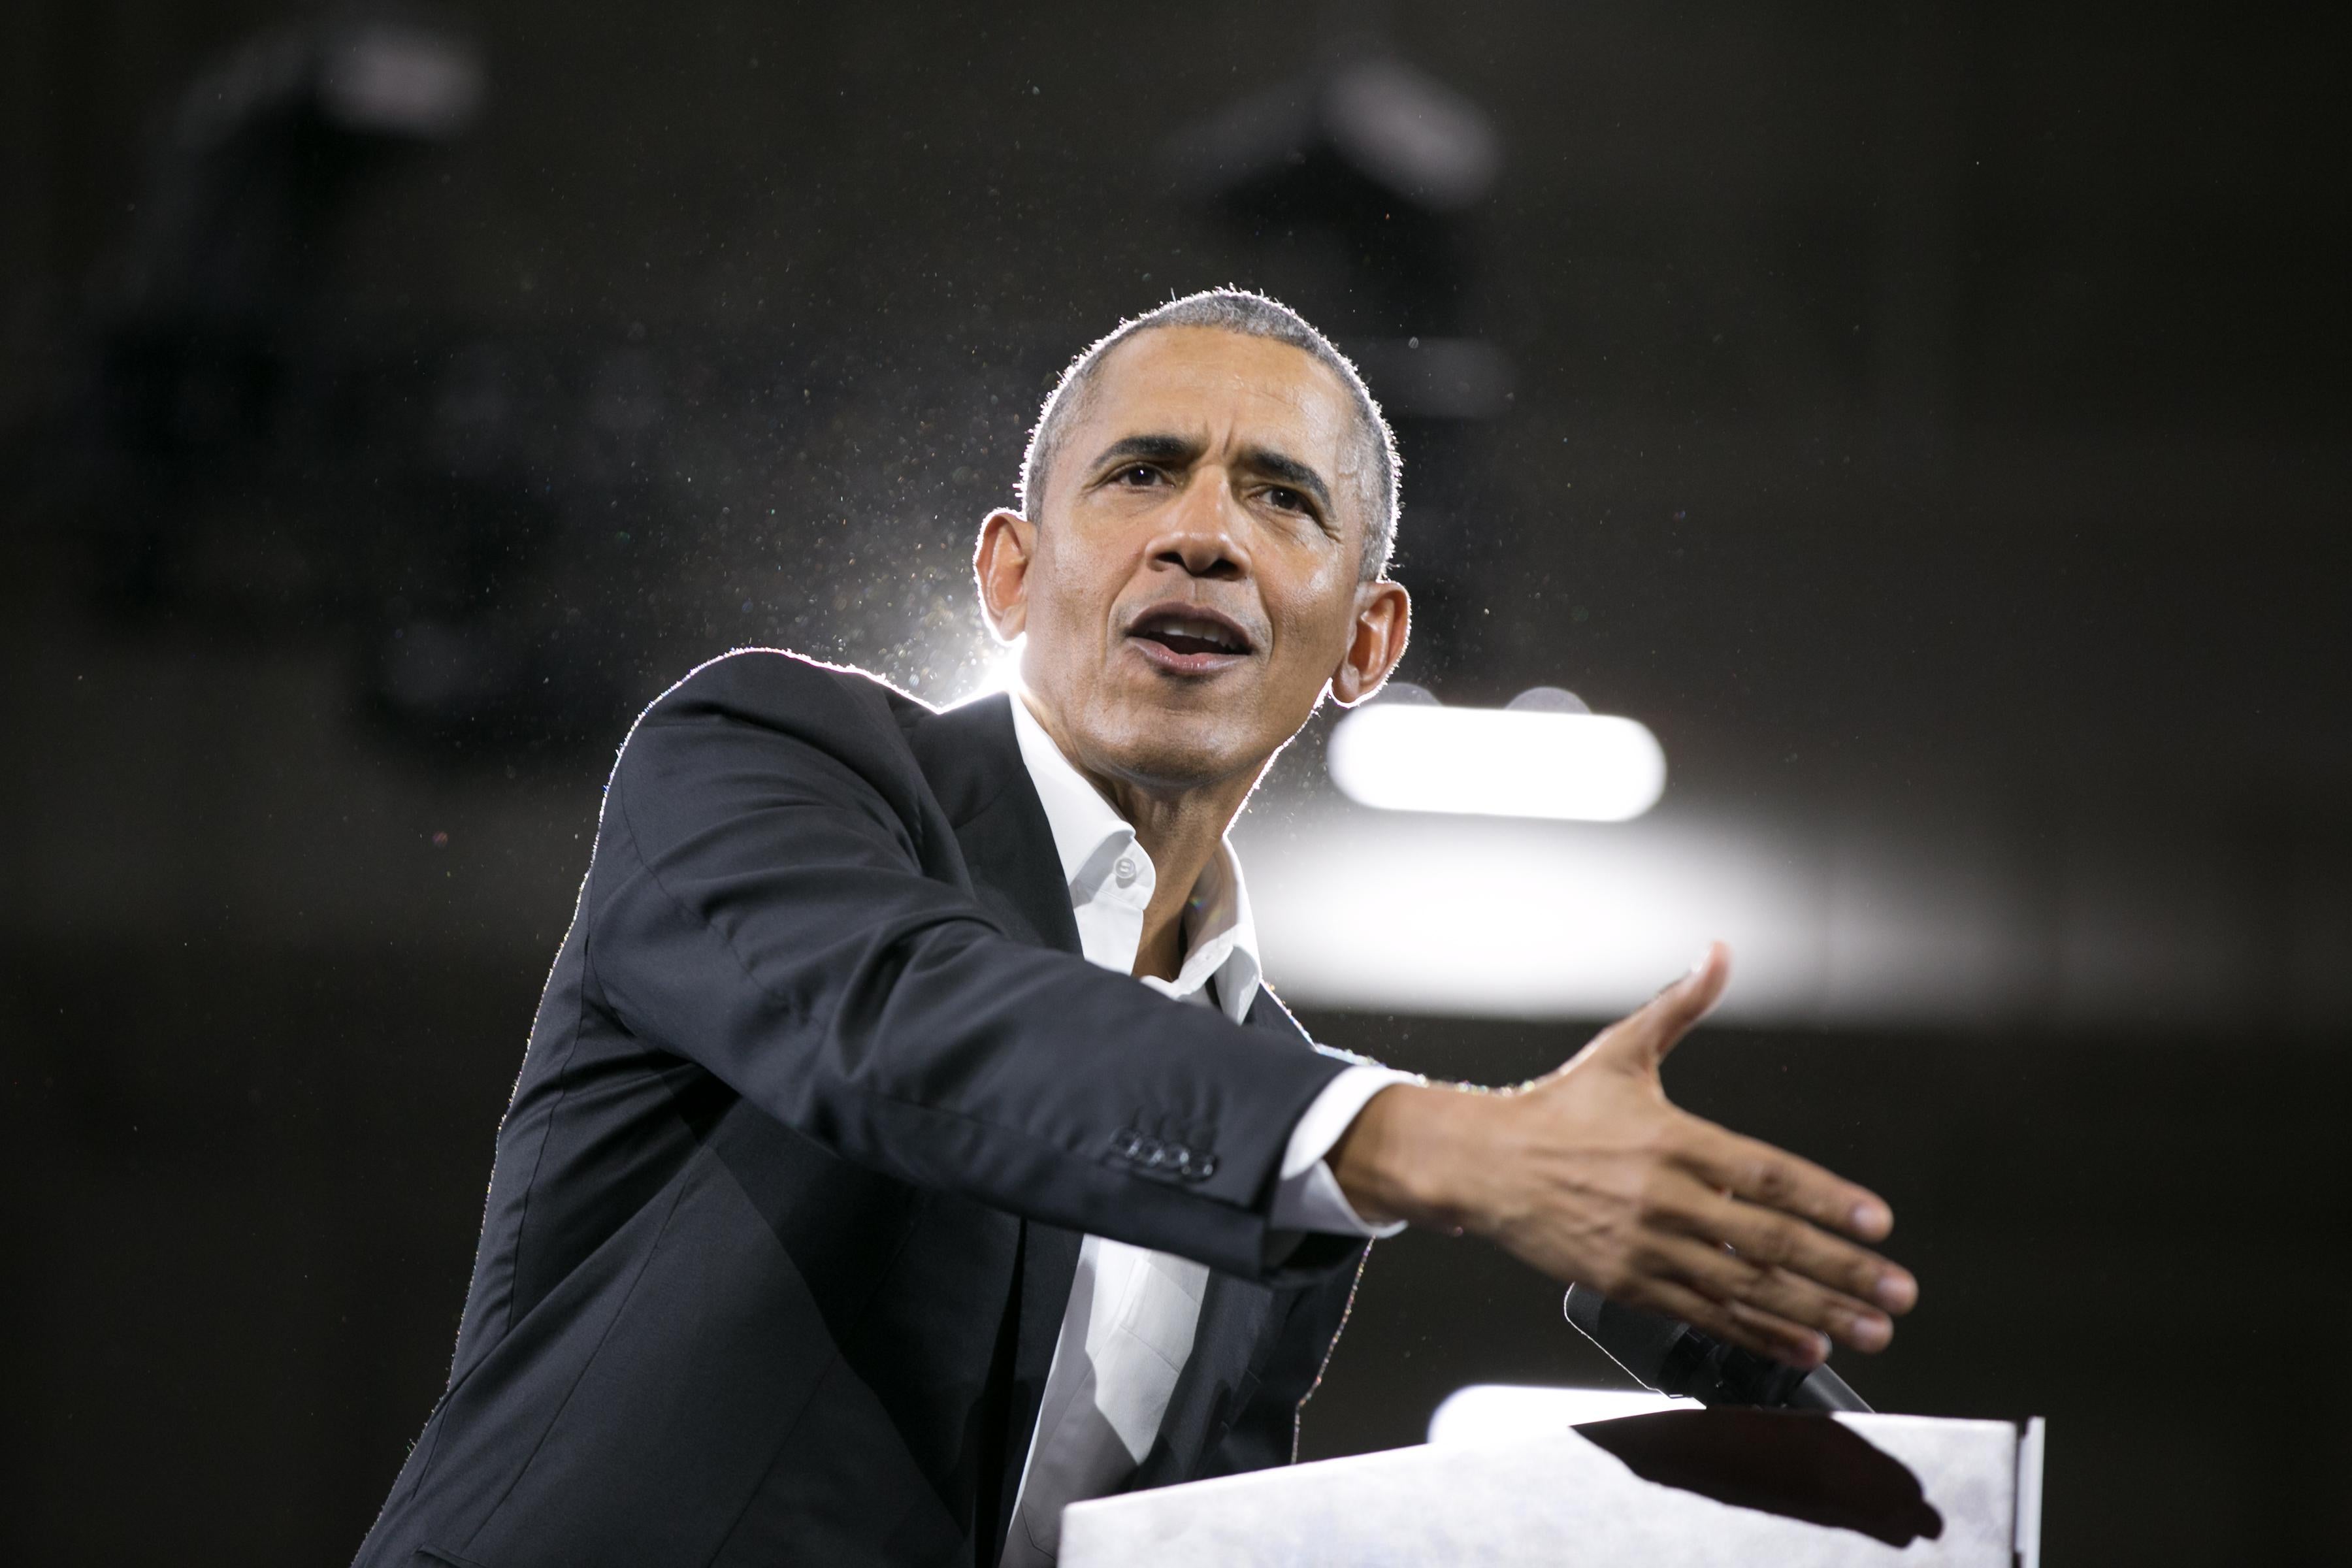 Former President Barack Obama addresses a crowd at Morehouse College on Nov. 2 in Atlanta.